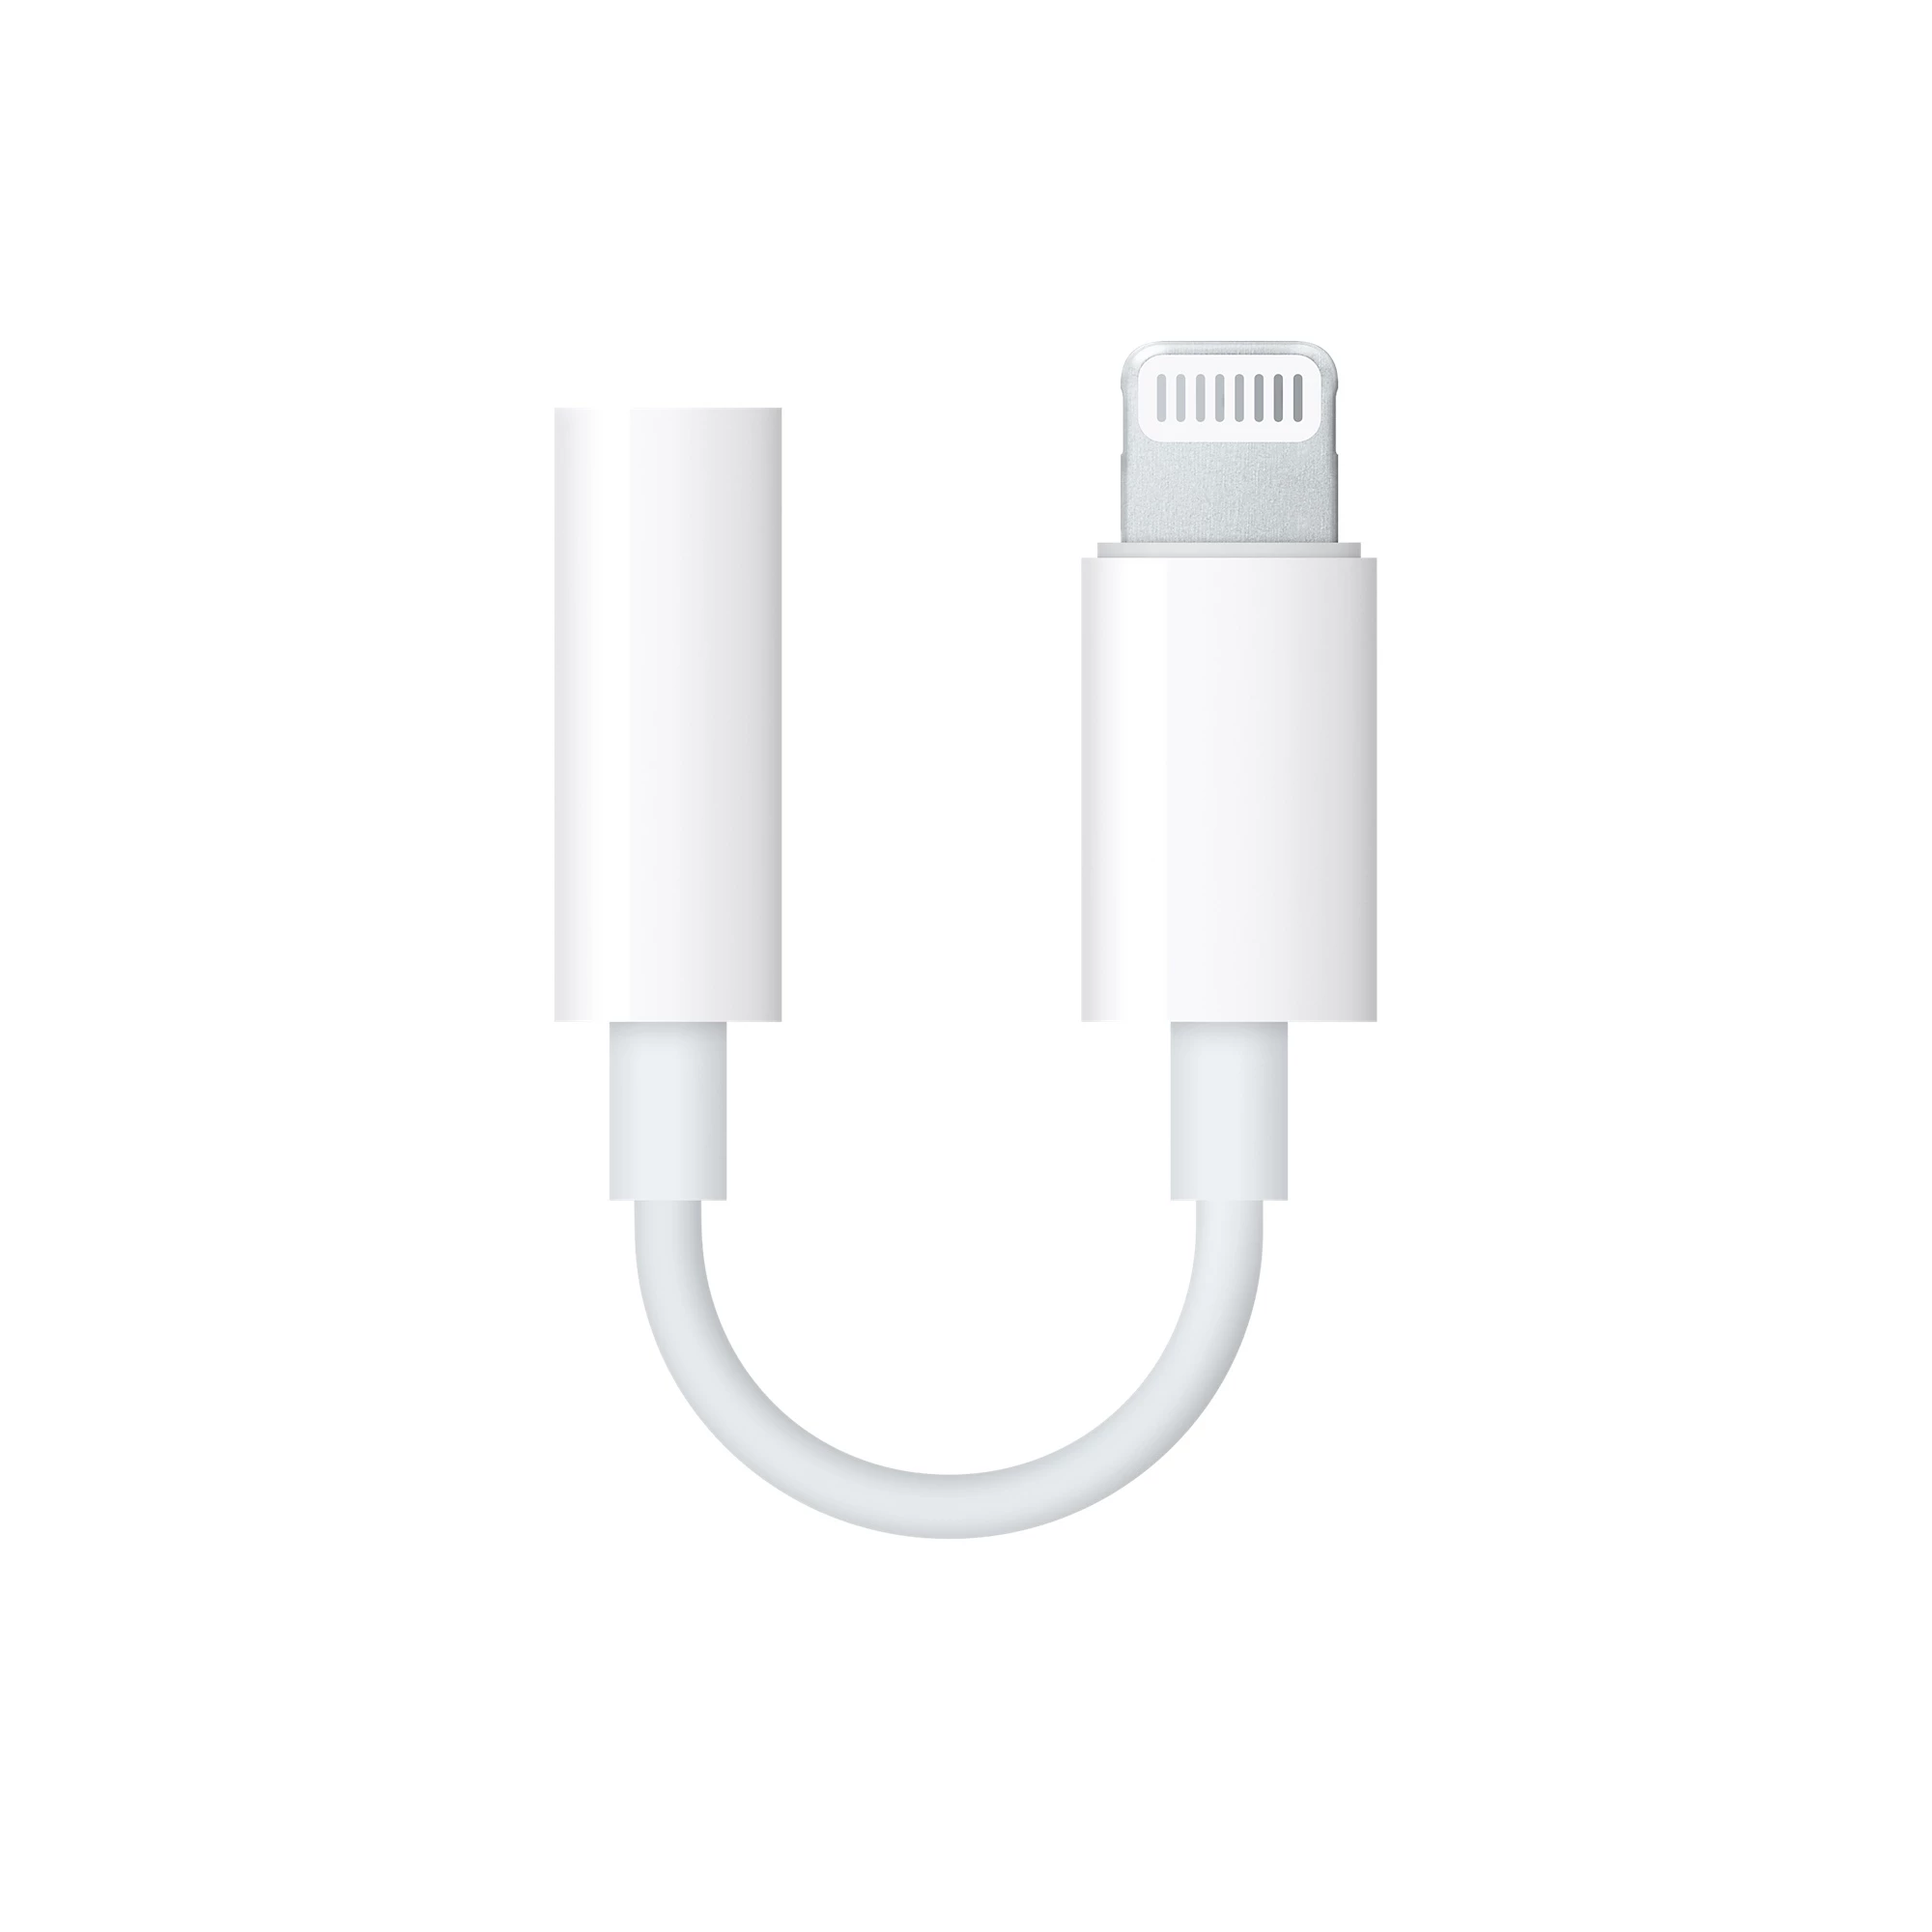 NO BOX  Apple Lightning to 3.5mm Headphones for iPhone (MMX62)(Оригинал из комплекта iPhone)